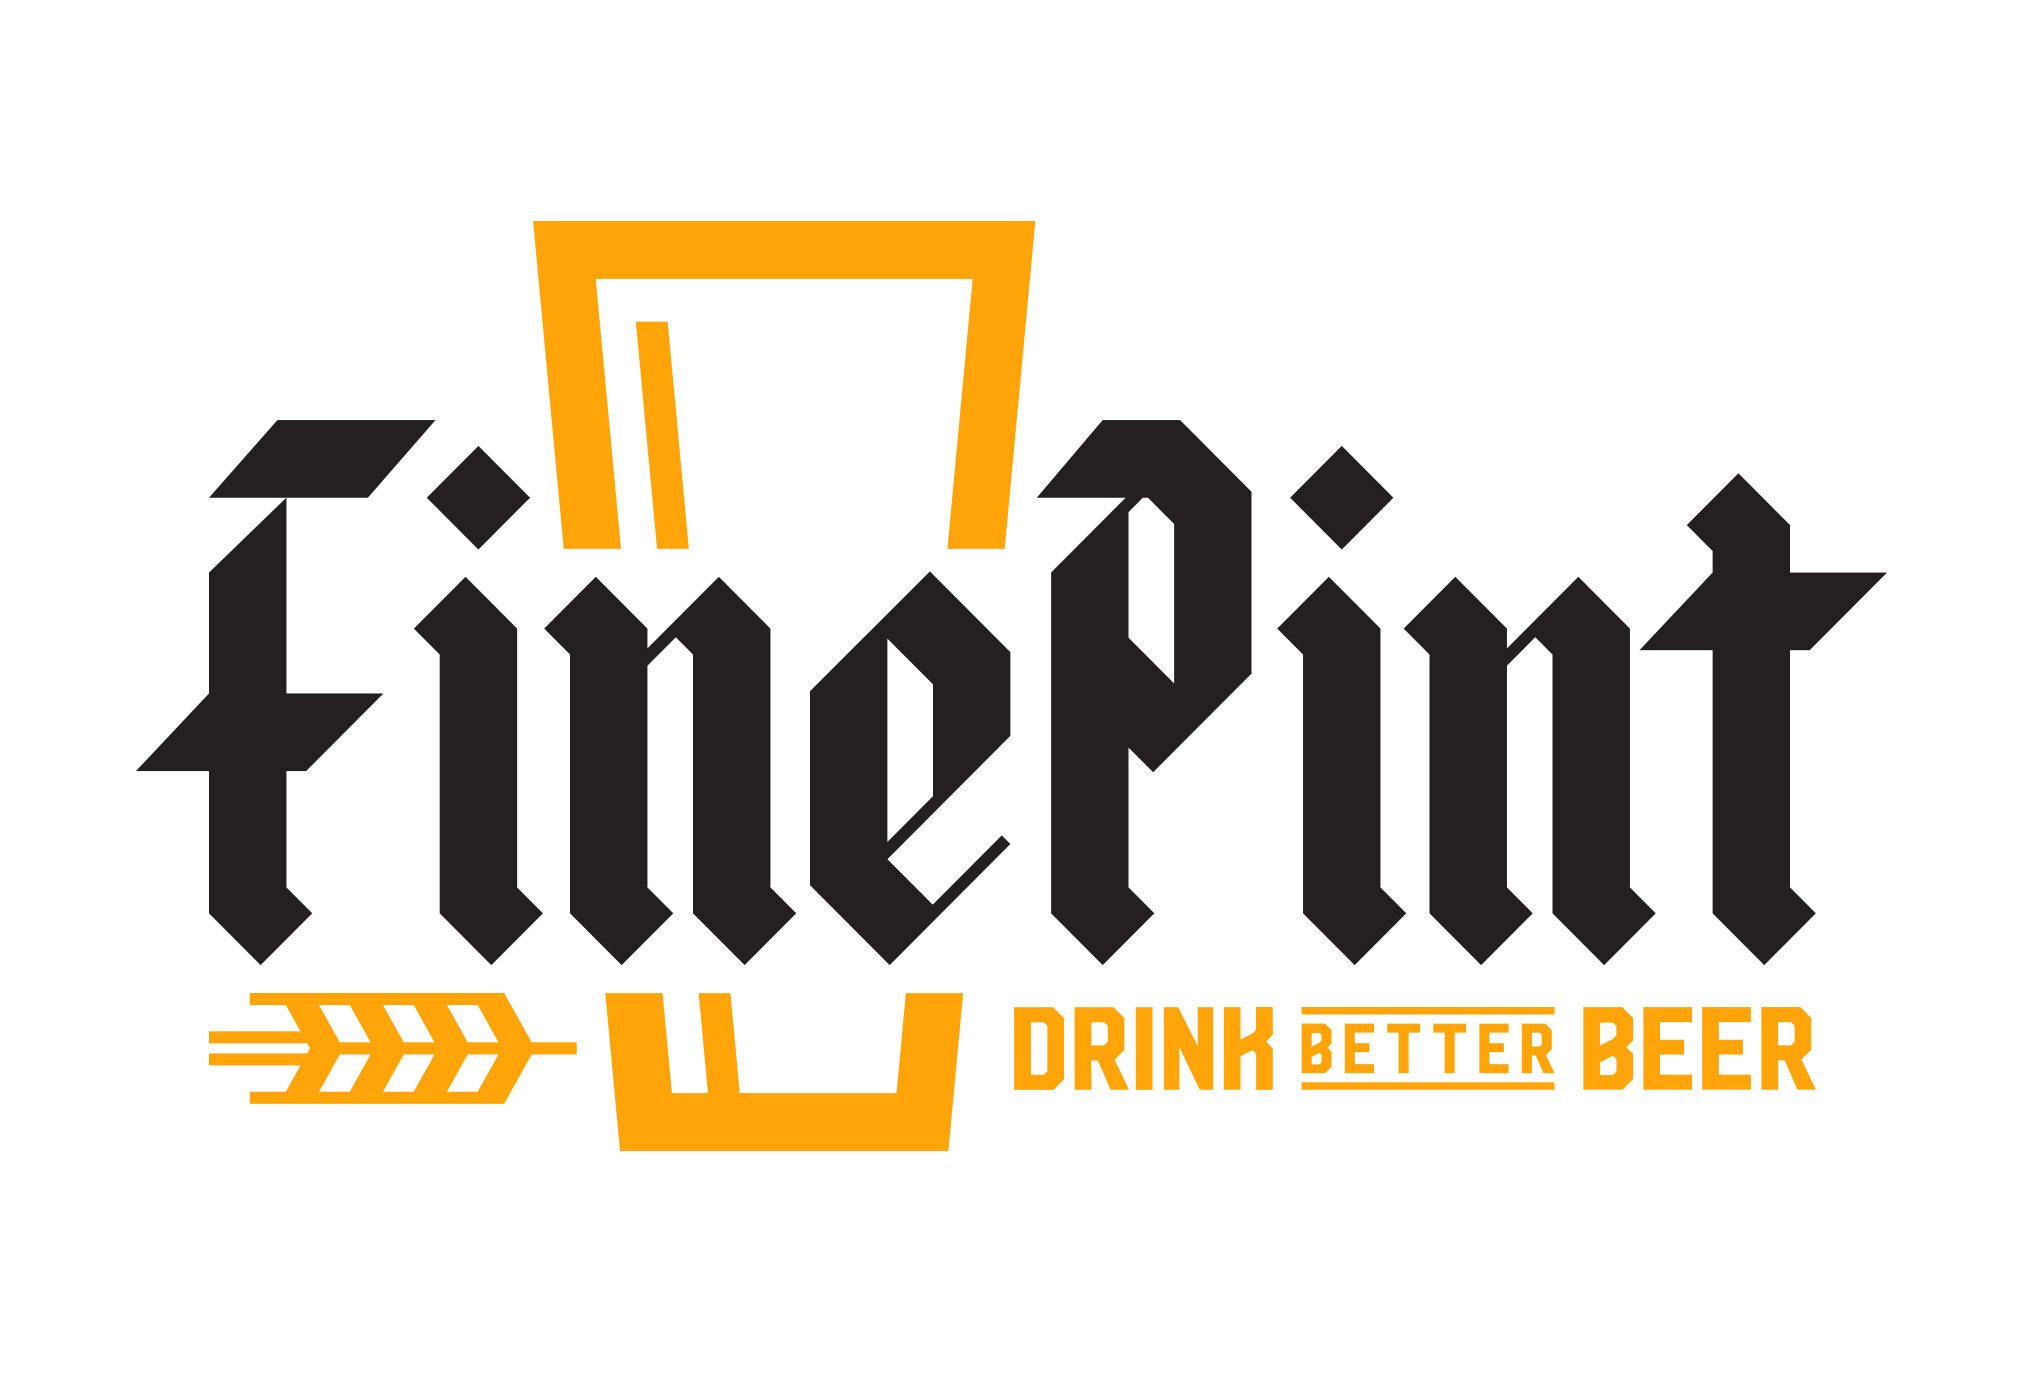 fine pint beer logo design by left hand design in austin texas